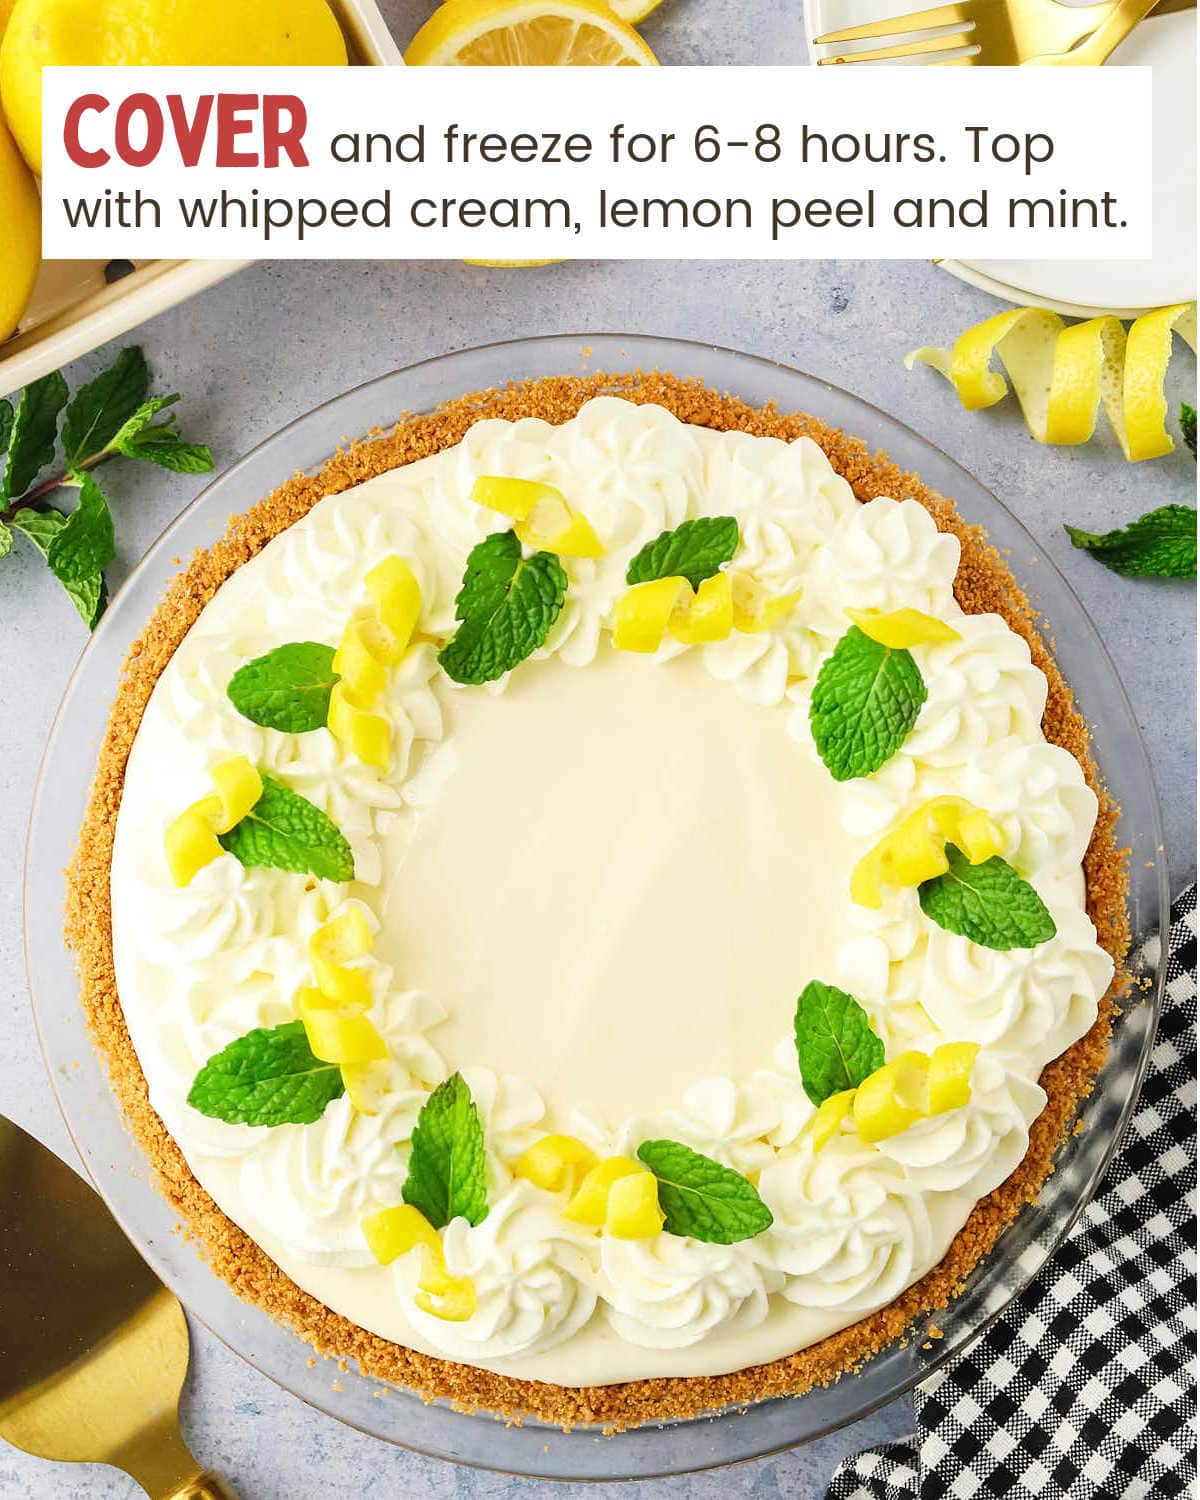 Finished Frozen Lemonade Pie garnished with lemon peel and mint leaves.